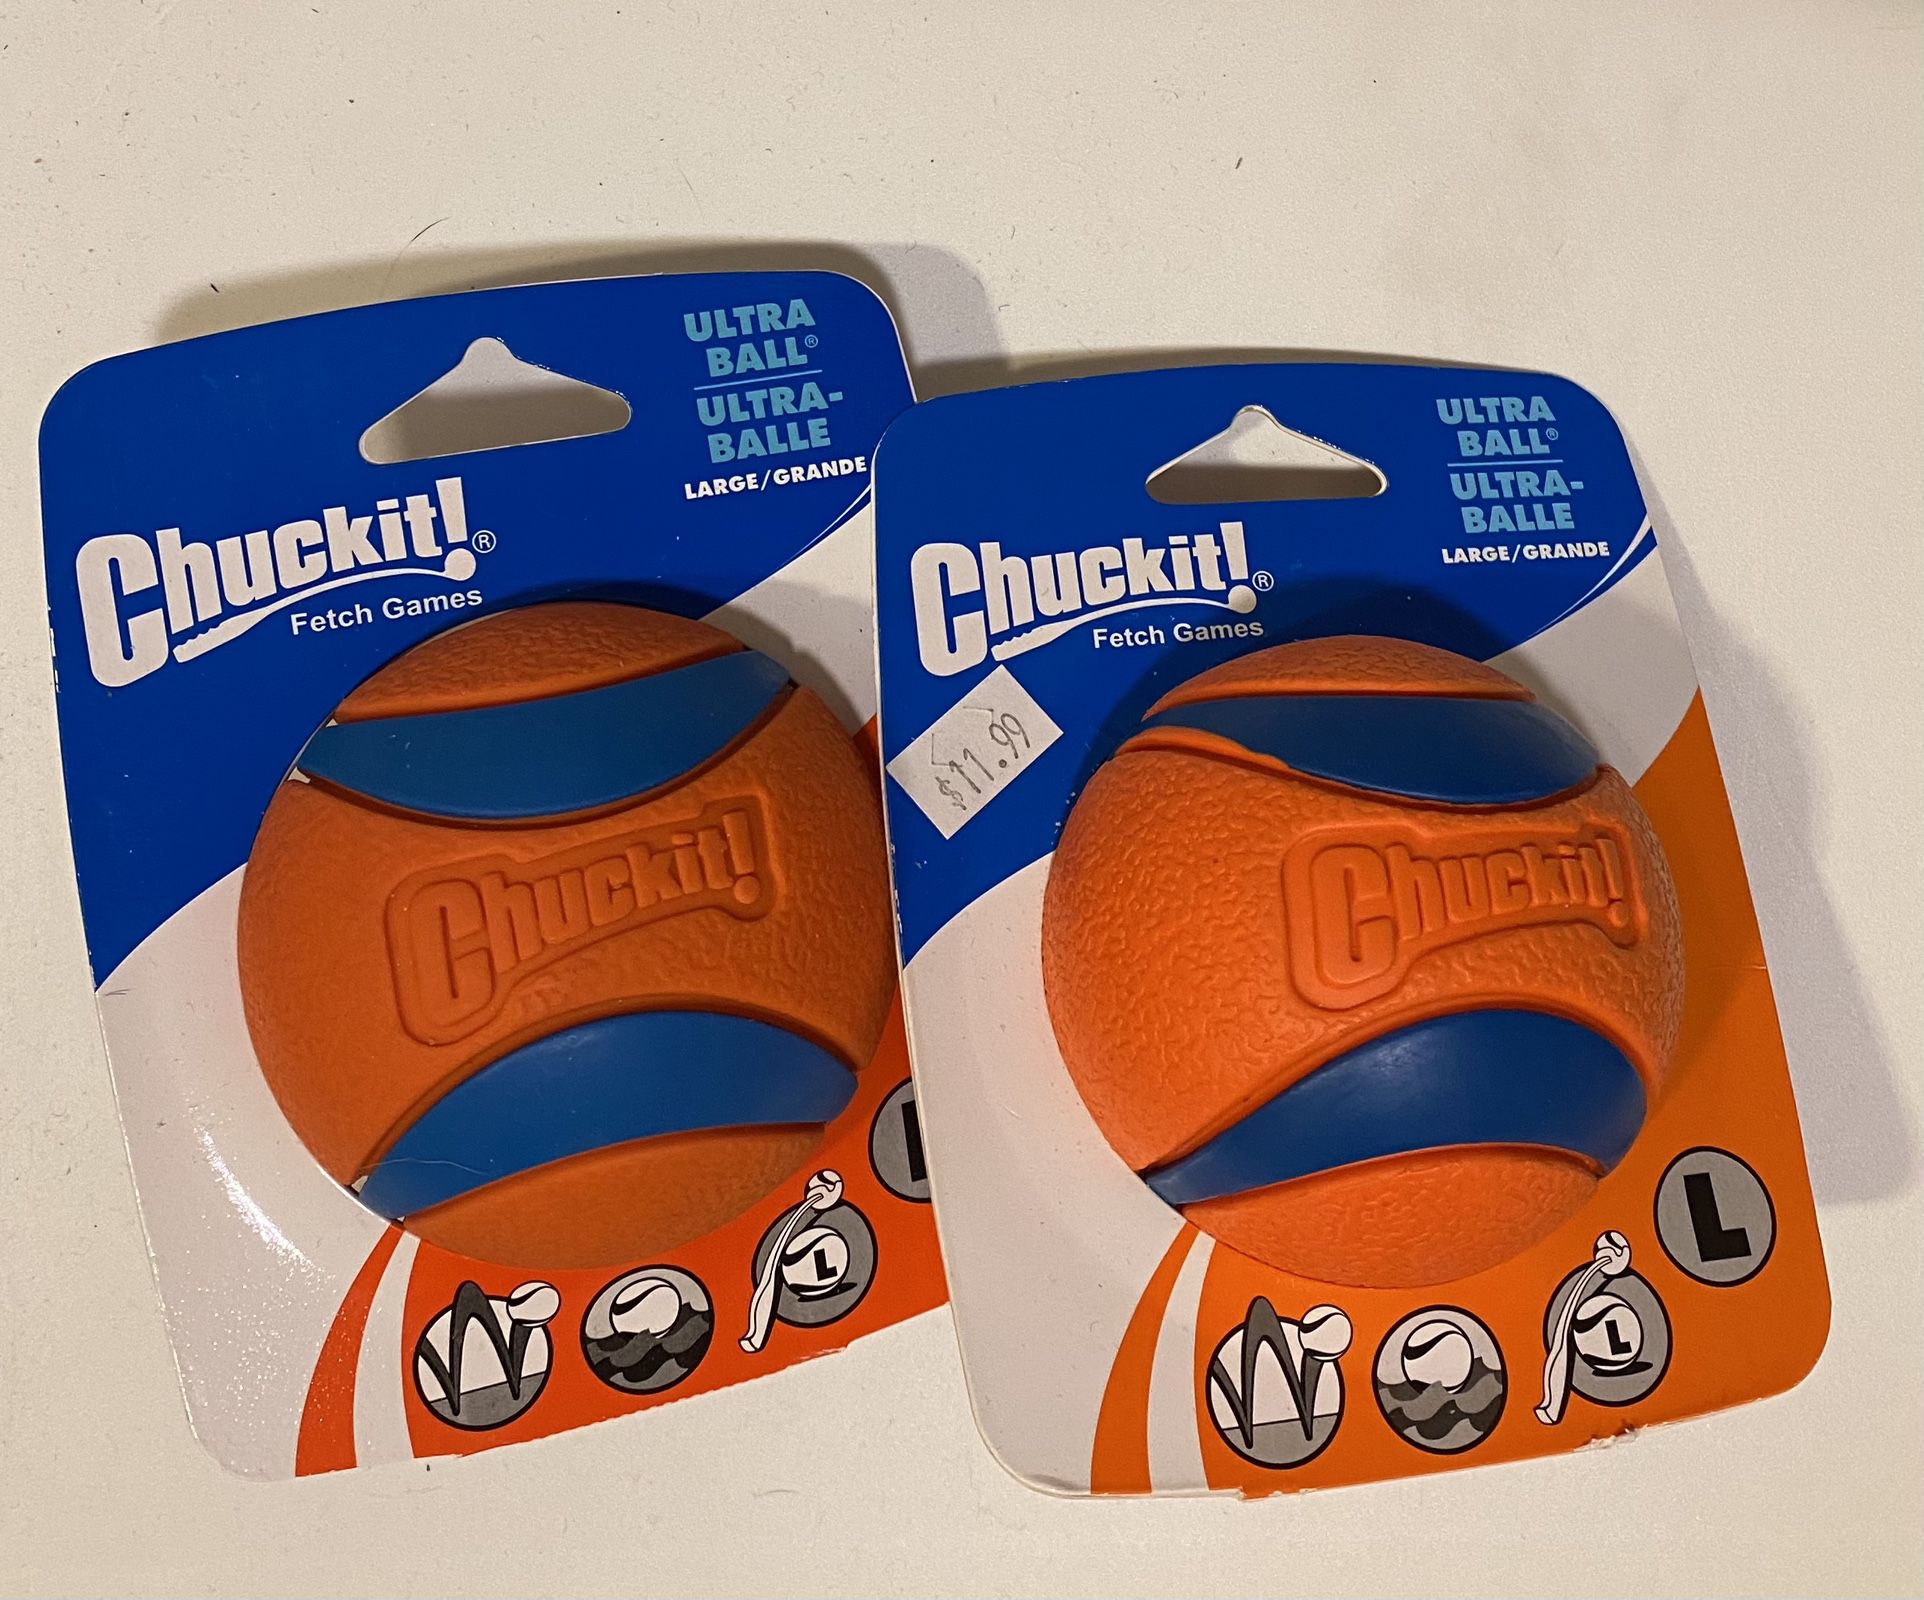 Chuckit brand tennis balls set of two (new)